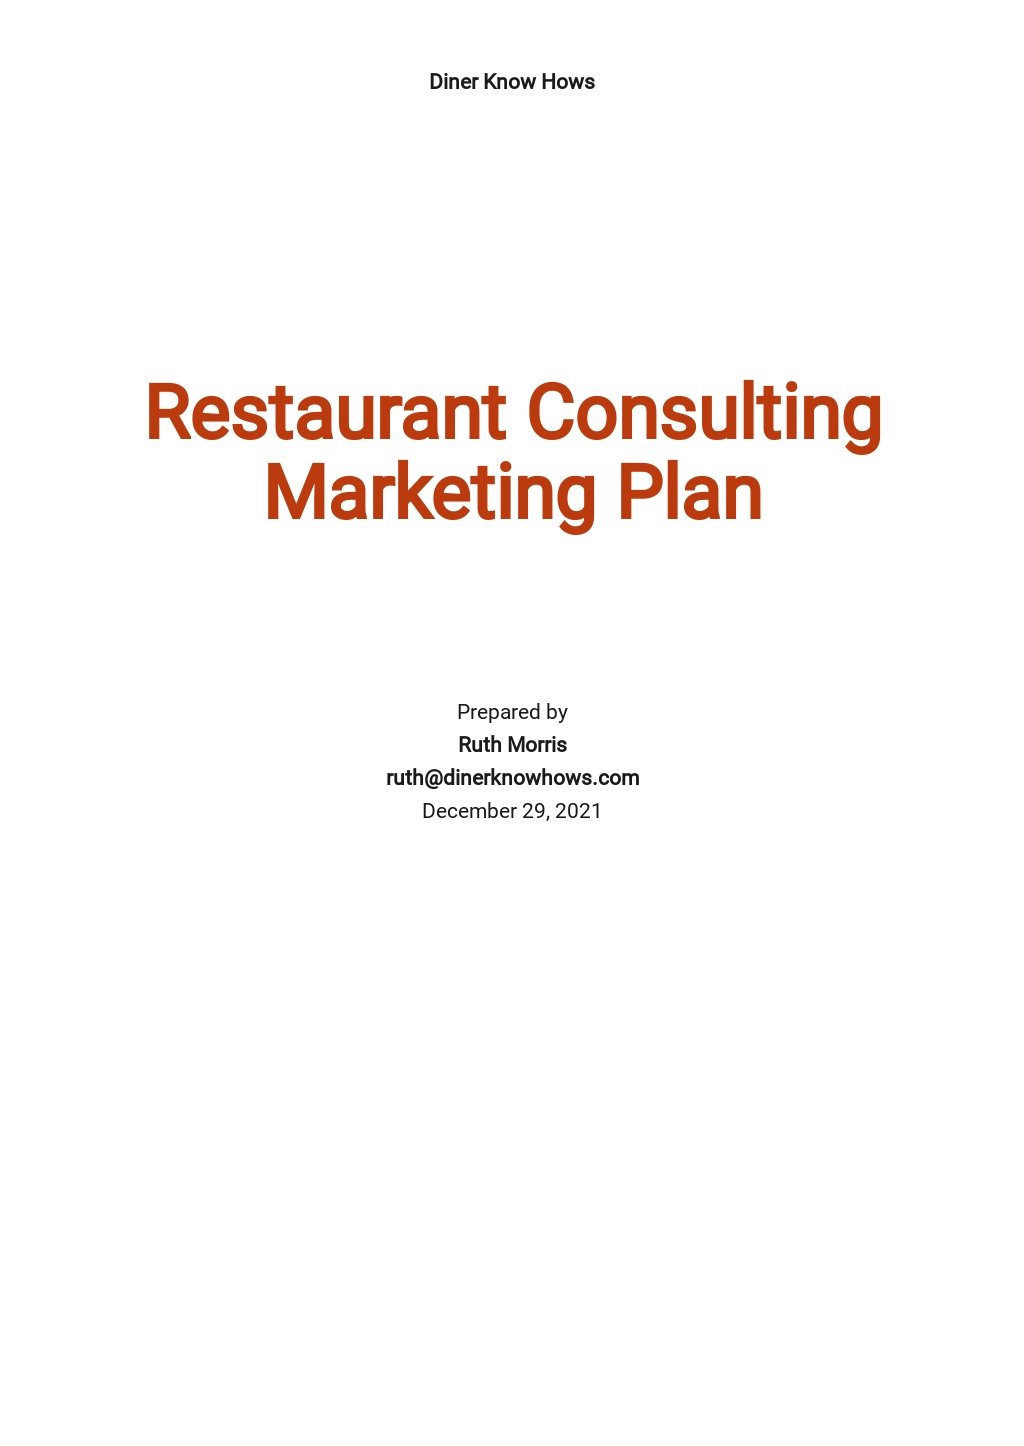 60+ FREE Restaurant Marketing Plan Templates [Edit & Download